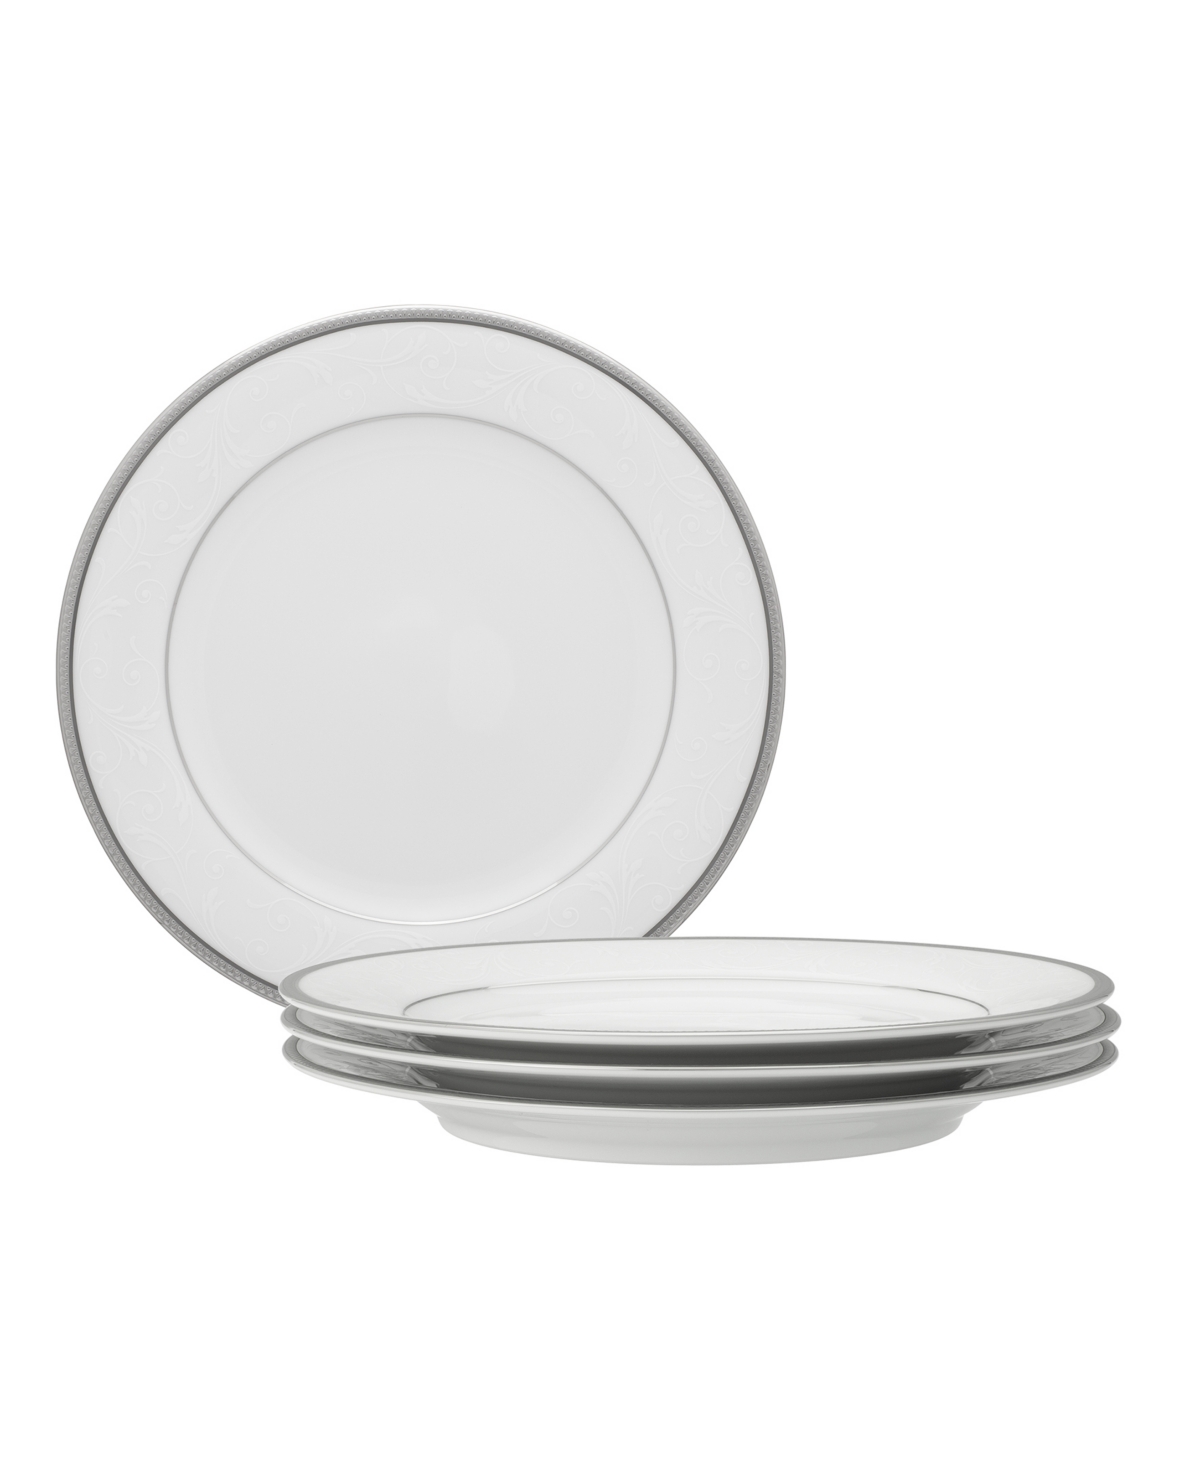 Noritake Regina Platinum Set Of 4 Salad Plates, Service For 4 In White